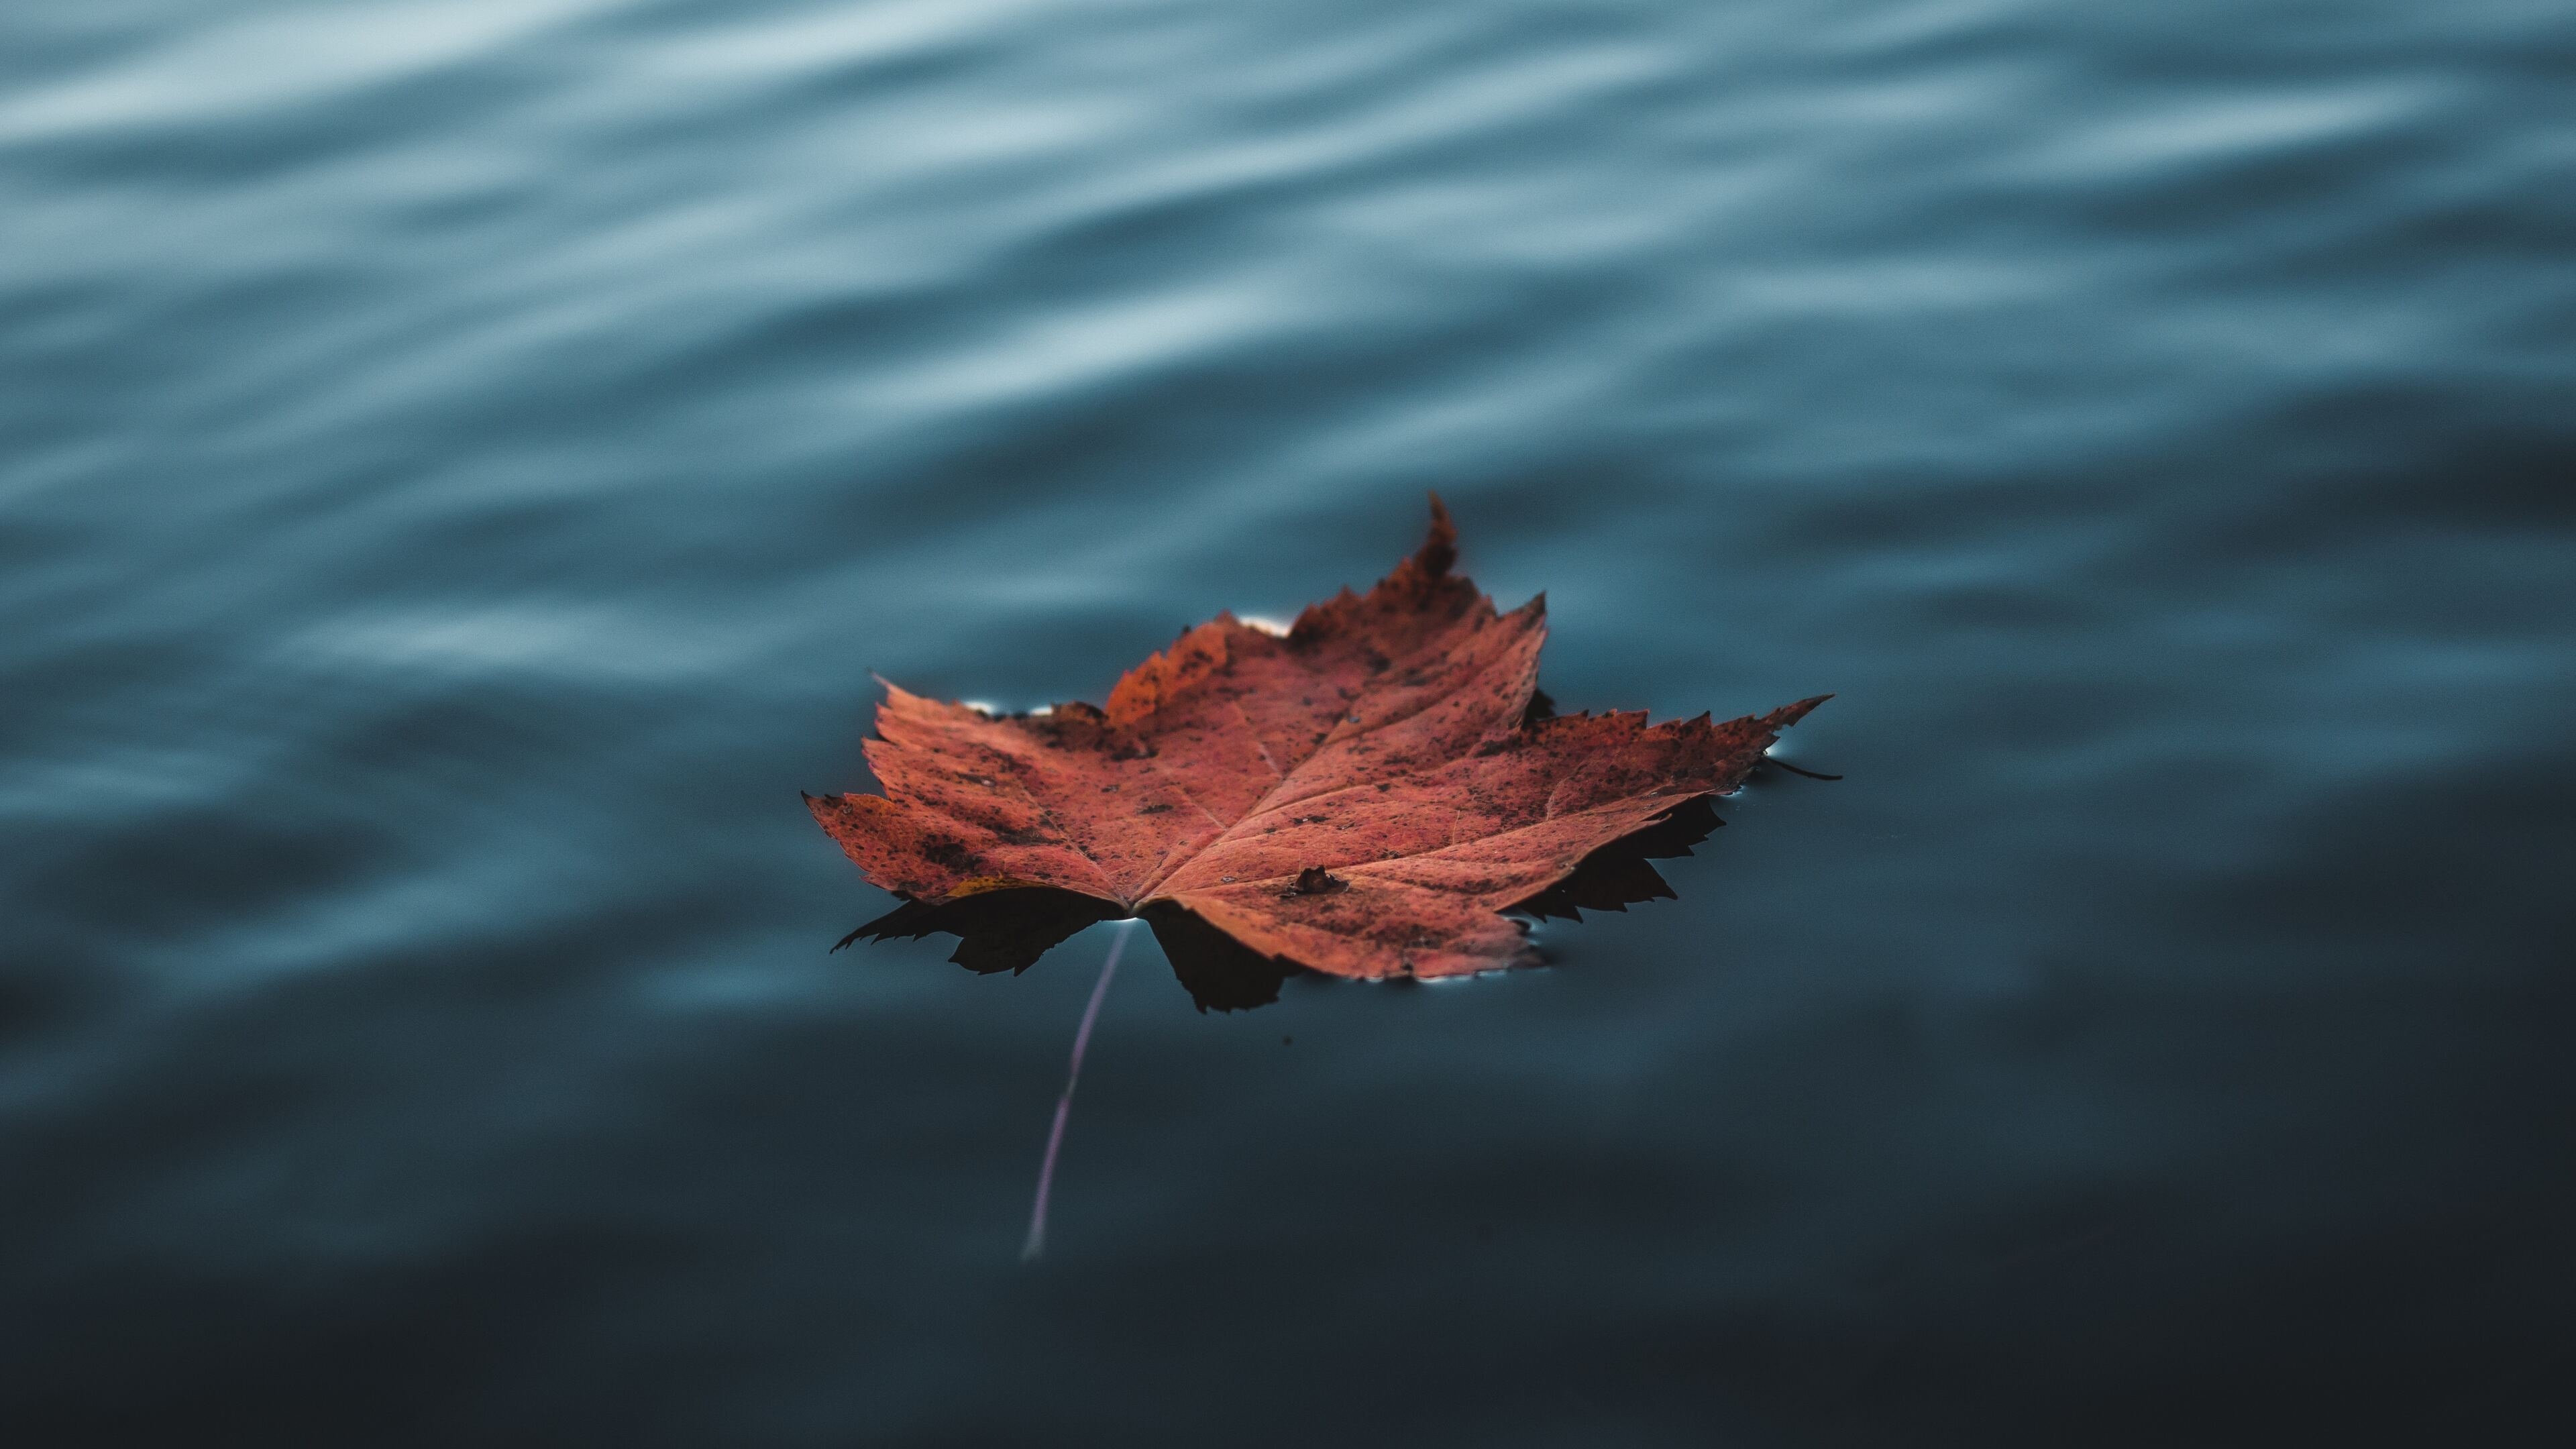 Orange autumn leaf, Floating on water, 4K HD wallpapers, Images and backgrounds, 3840x2160 4K Desktop